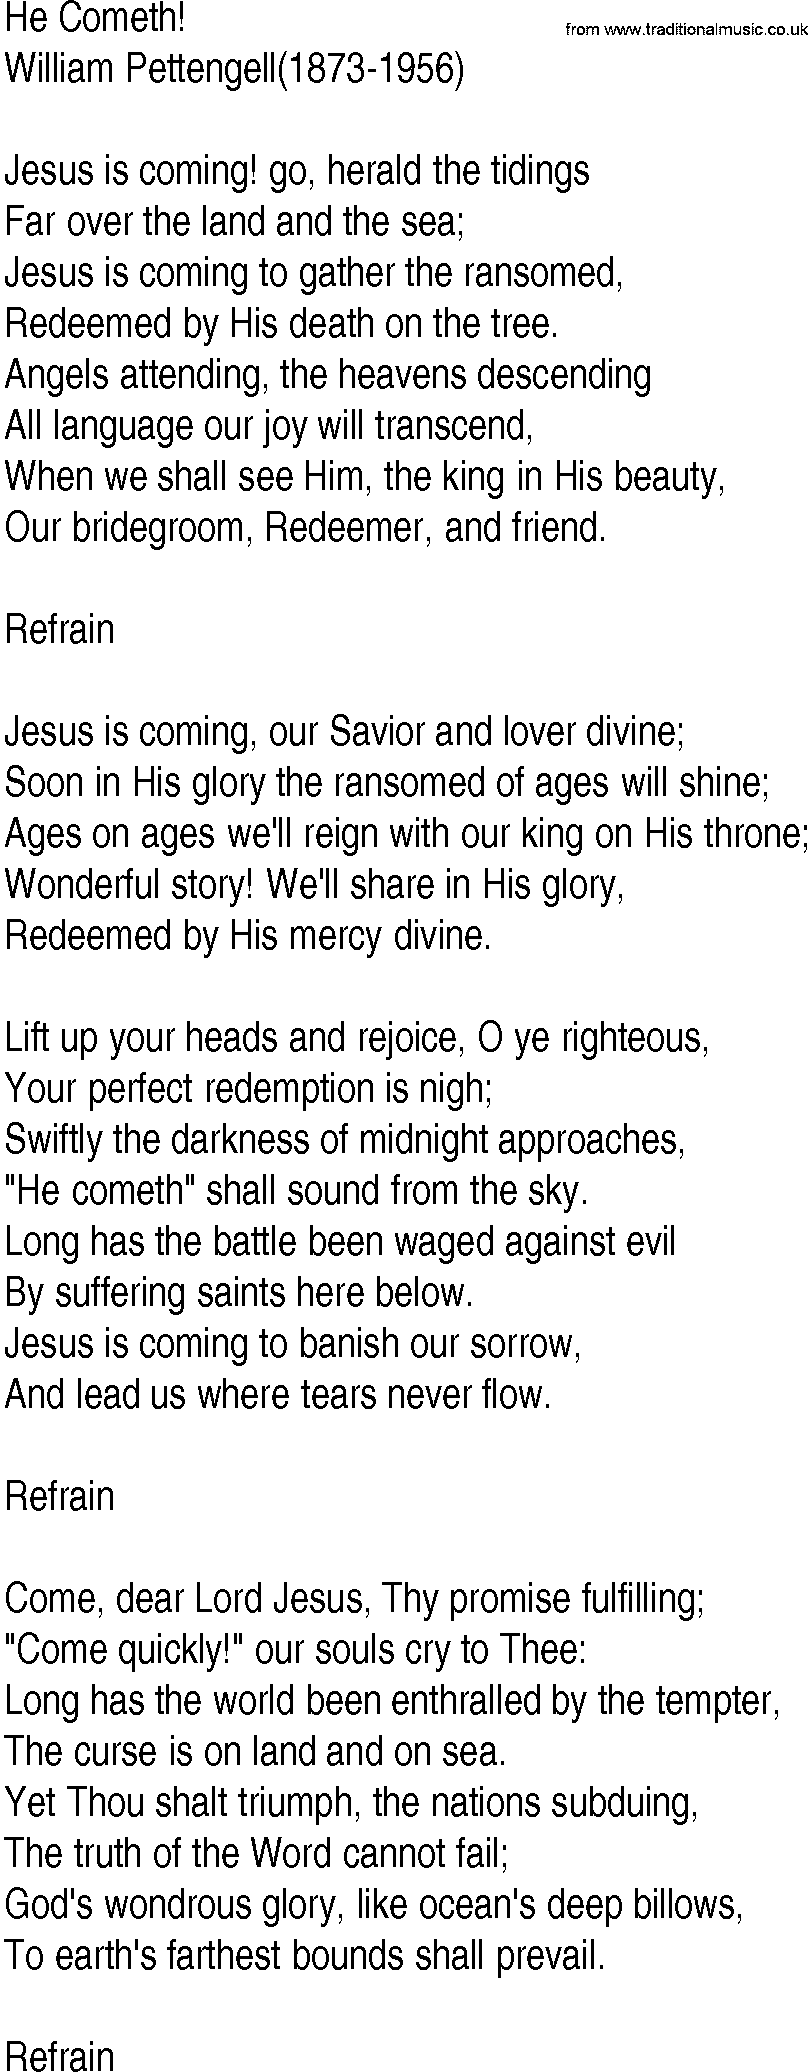 Hymn and Gospel Song: He Cometh! by William Pettengell lyrics